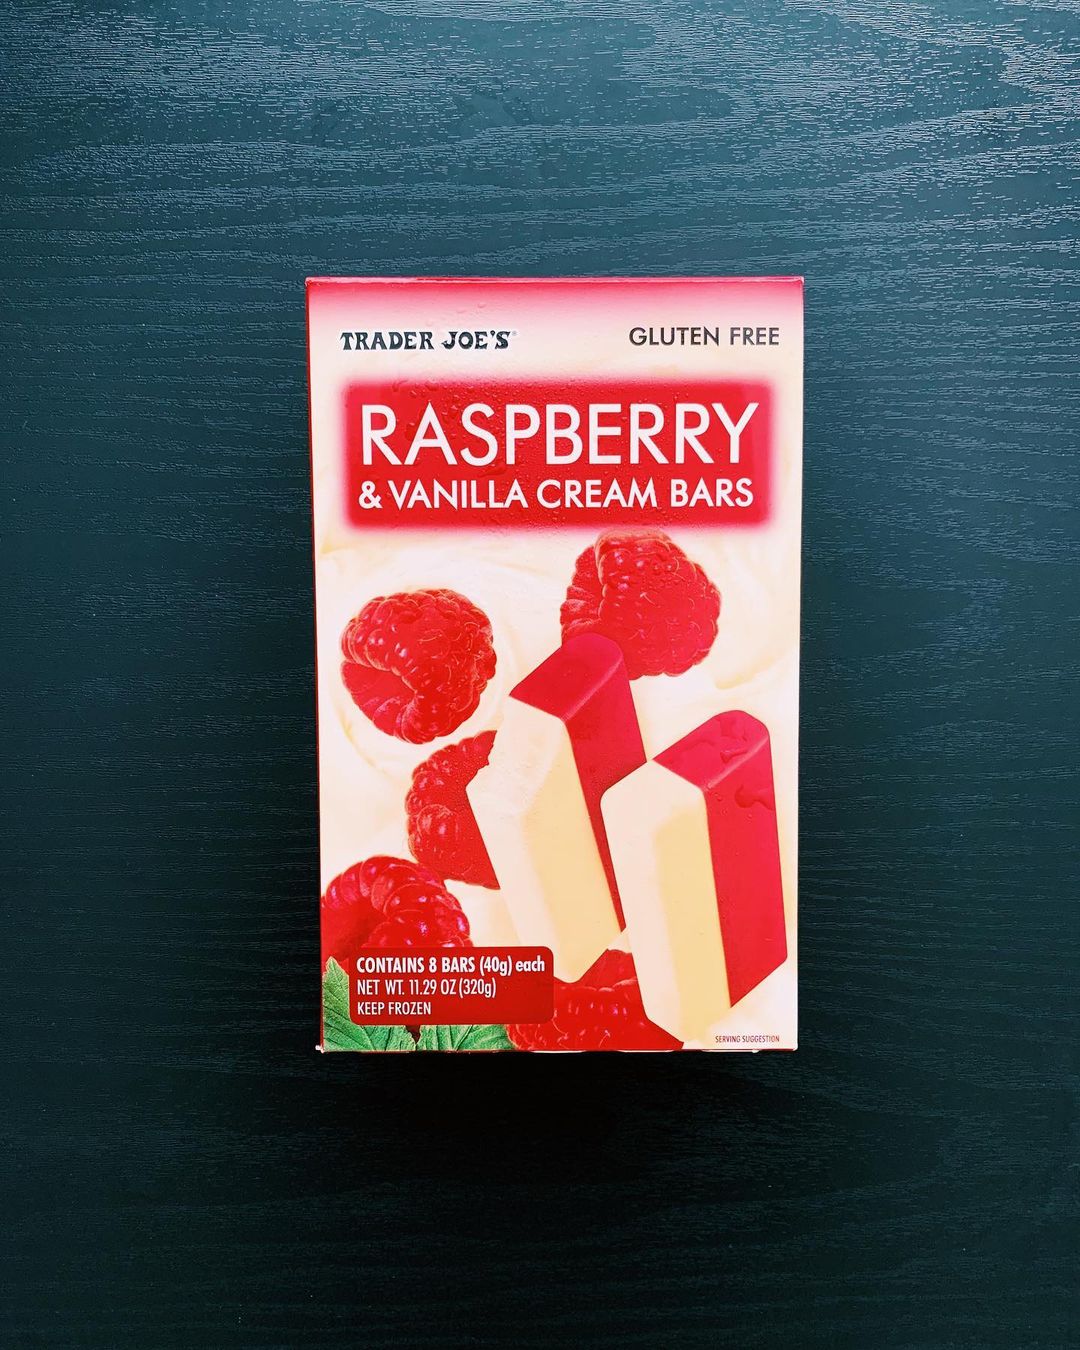 Raspberry & Vanilla Cream Bars: 9/10

...